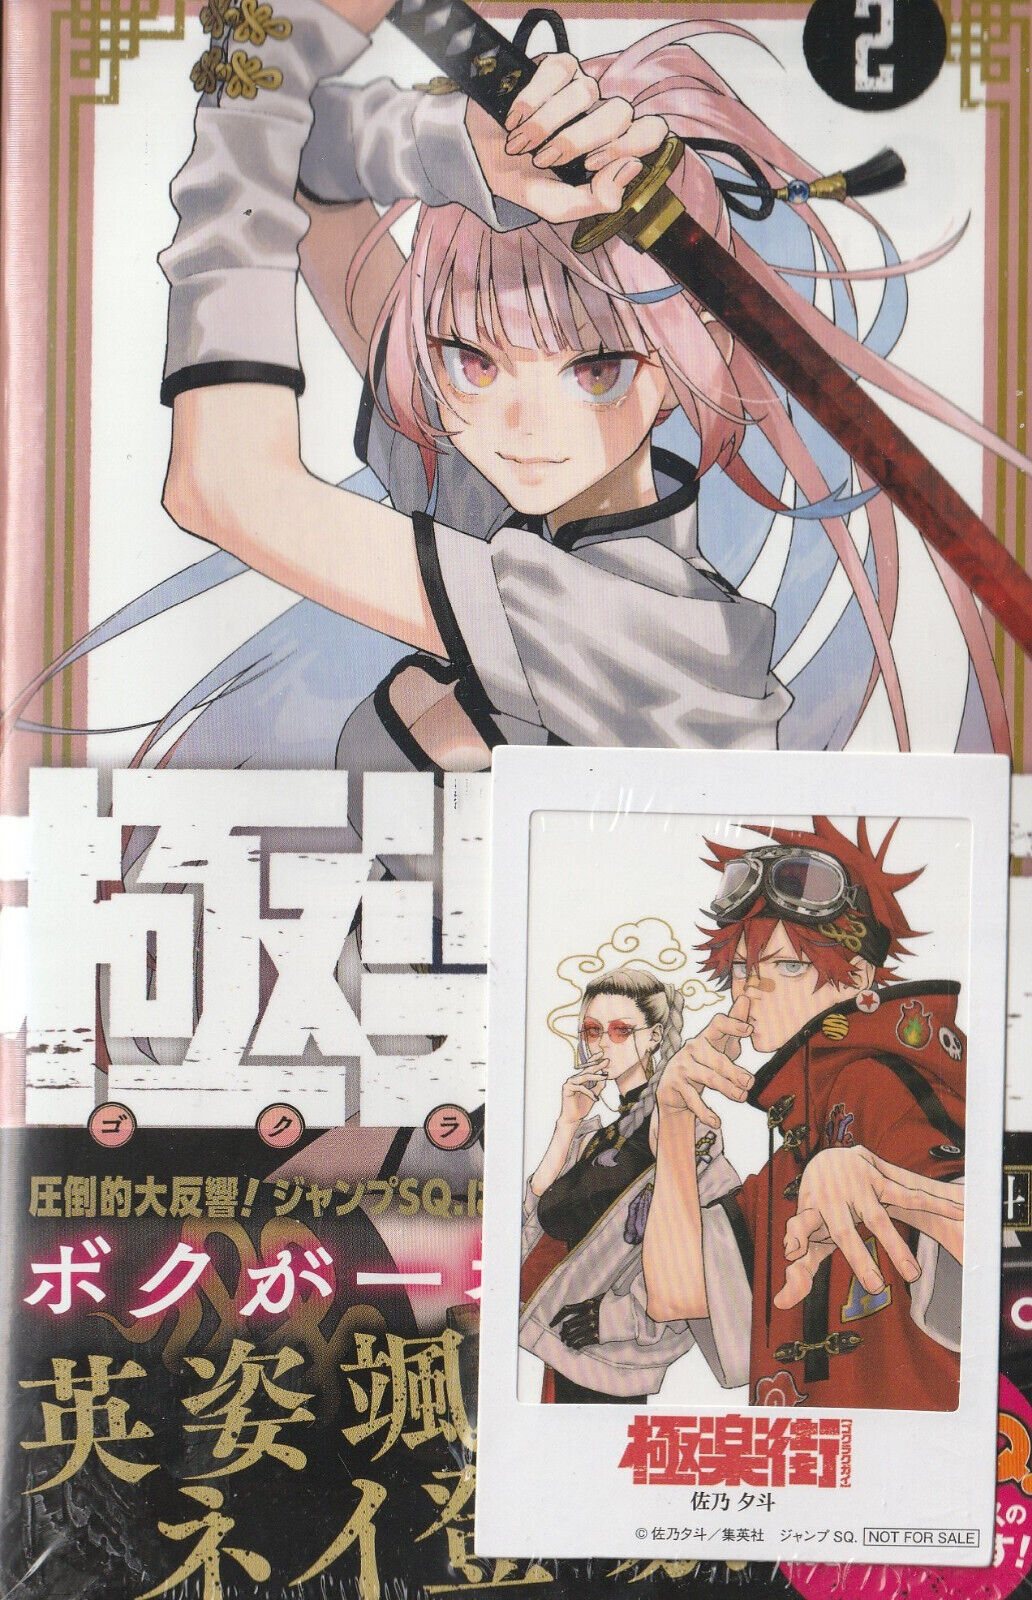 Gokurakugai Vol.2 Japanese Version Anime Manga with Photo Card Limited Quantity